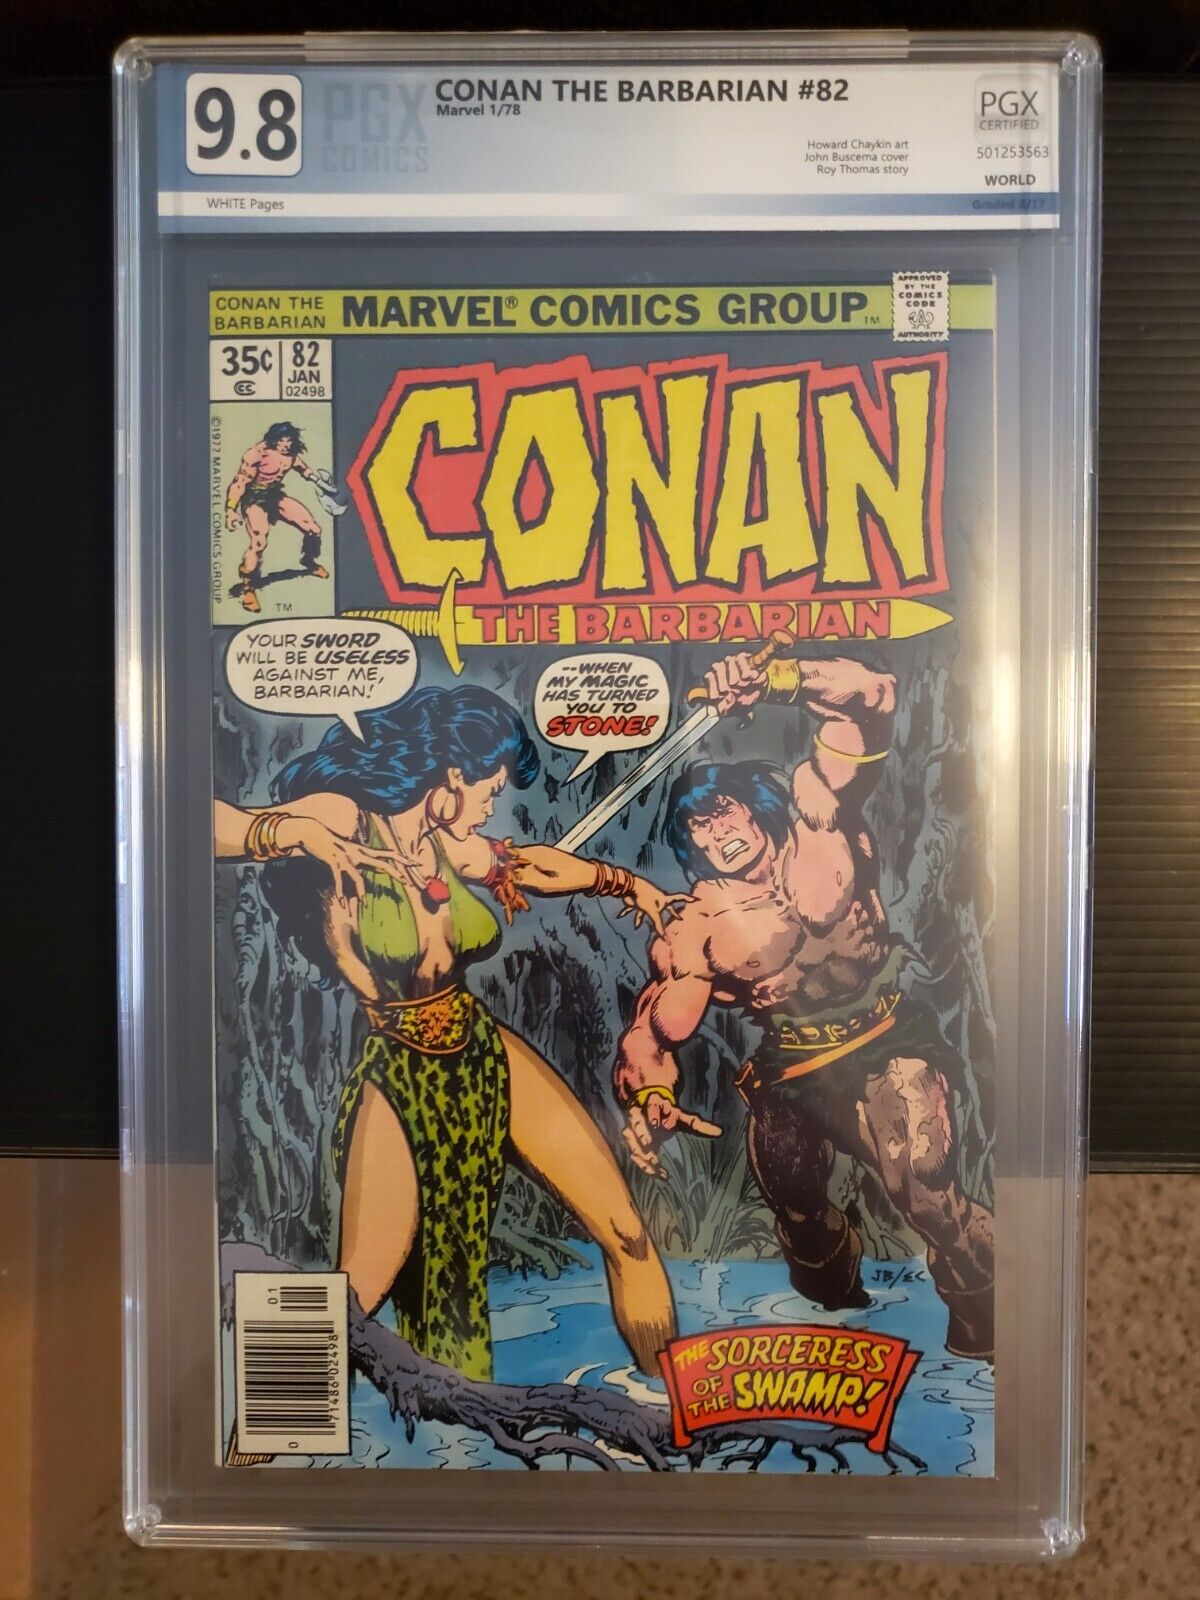 Conan the Barbarian #82 Marvel Comics 1978 John Buscema cover PGX 9.8 (not CGC)